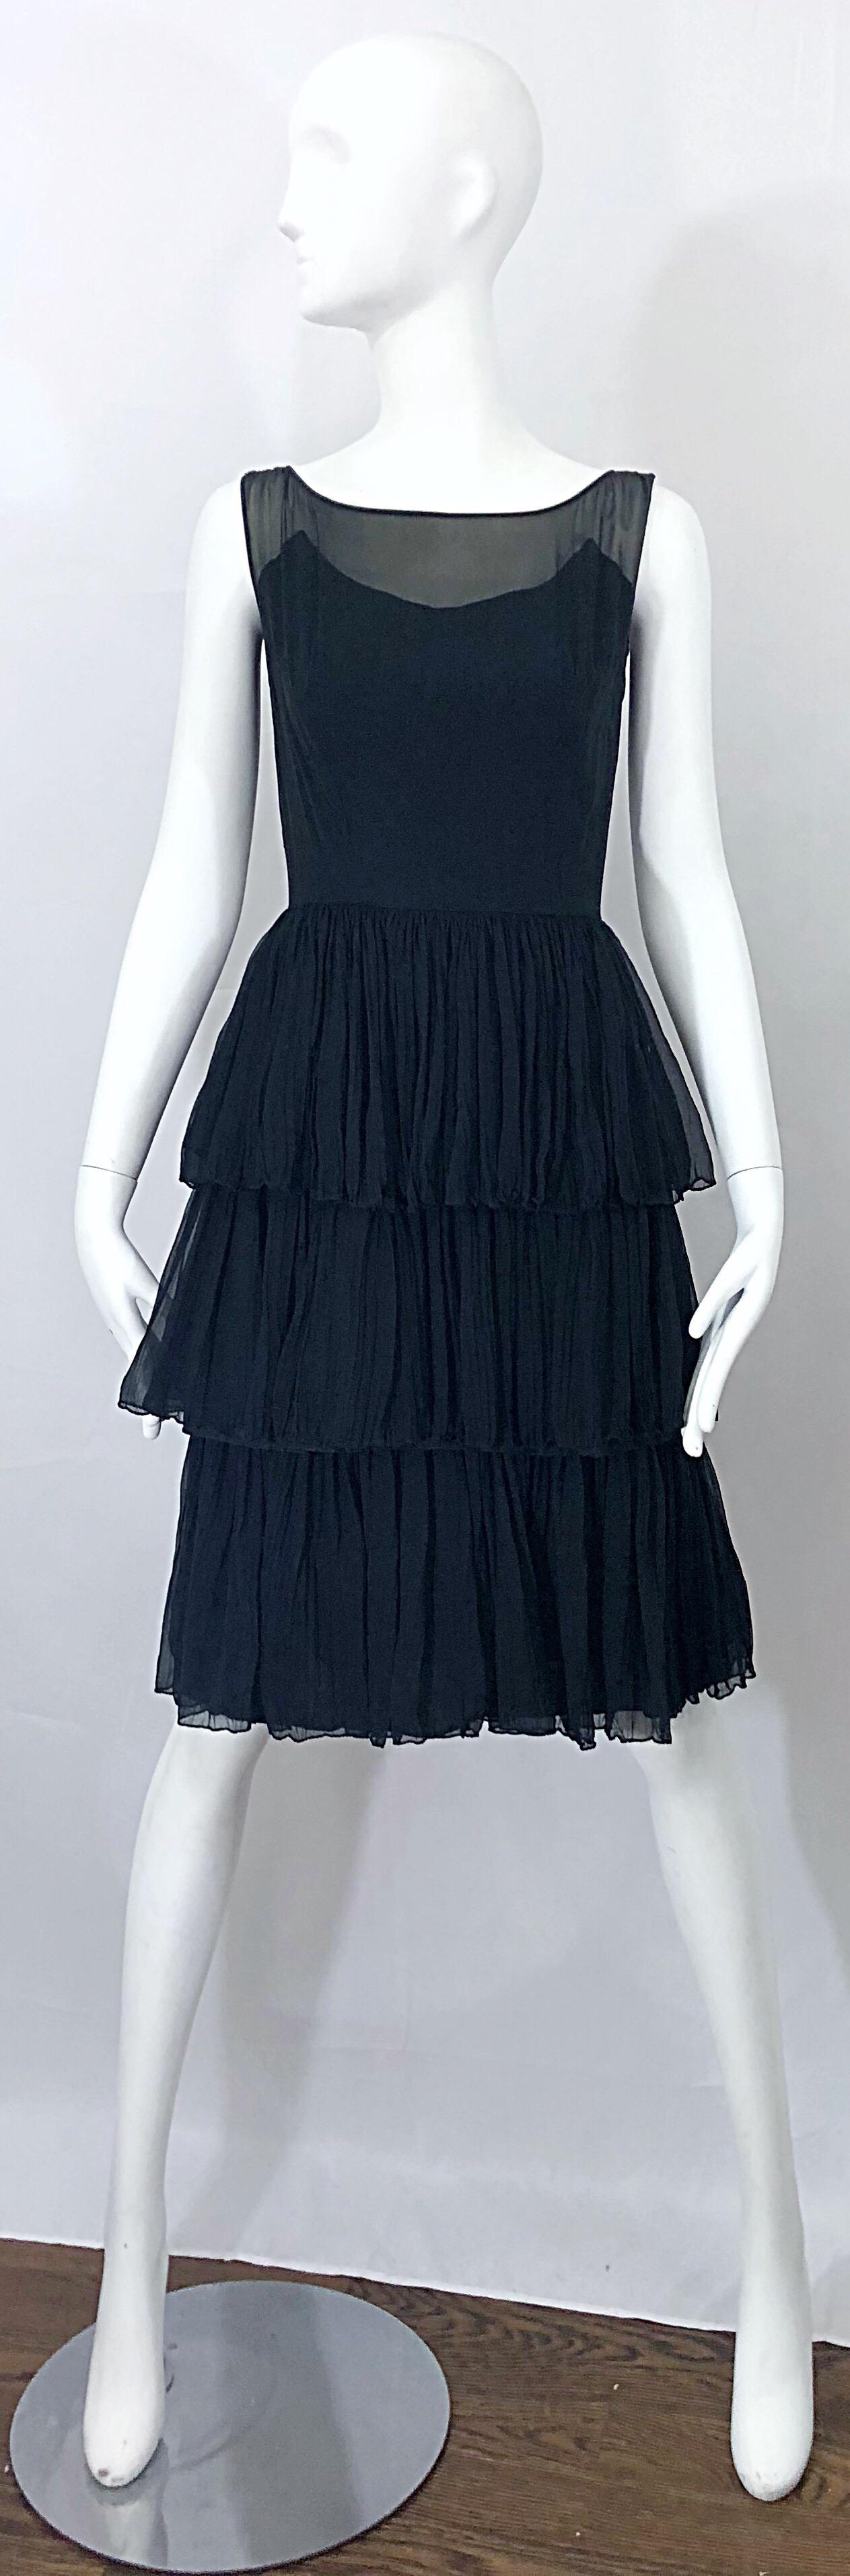 1950s Suzy Perette Black Silk Chiffon Nude Illusion Couture Vintage 50s Dress For Sale 7